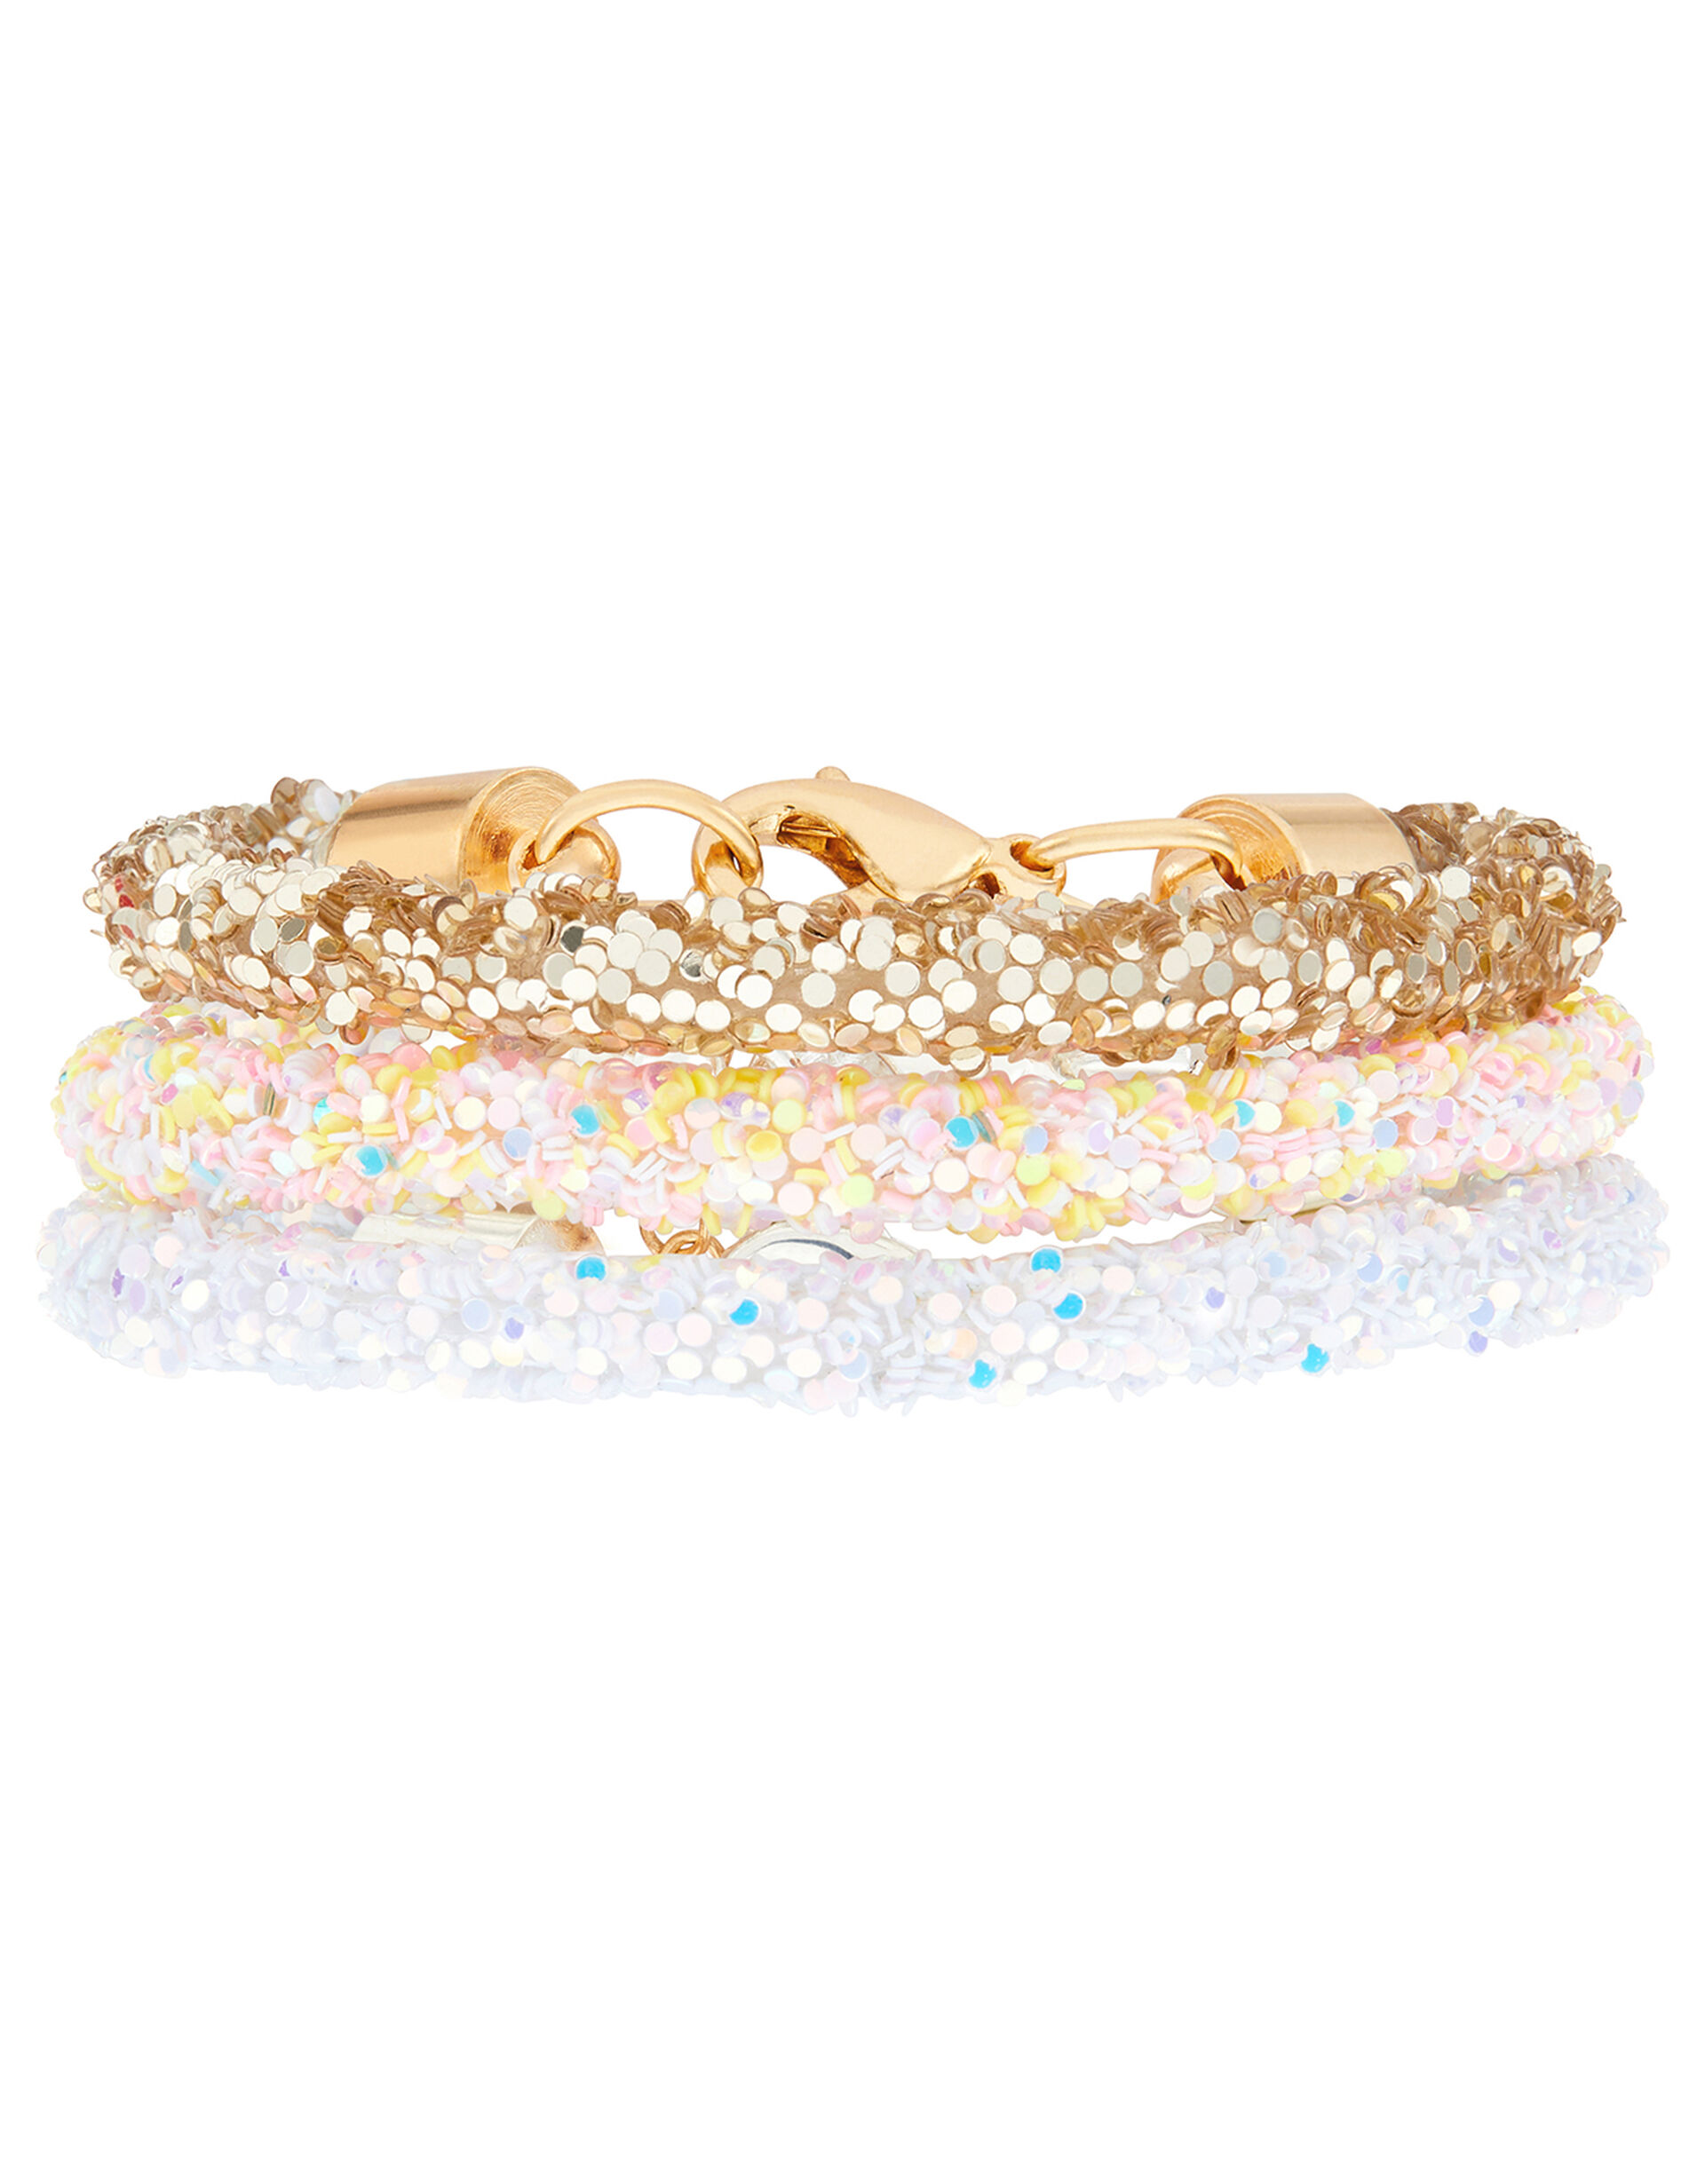 Rainbow Glitter Bracelet Set, , large